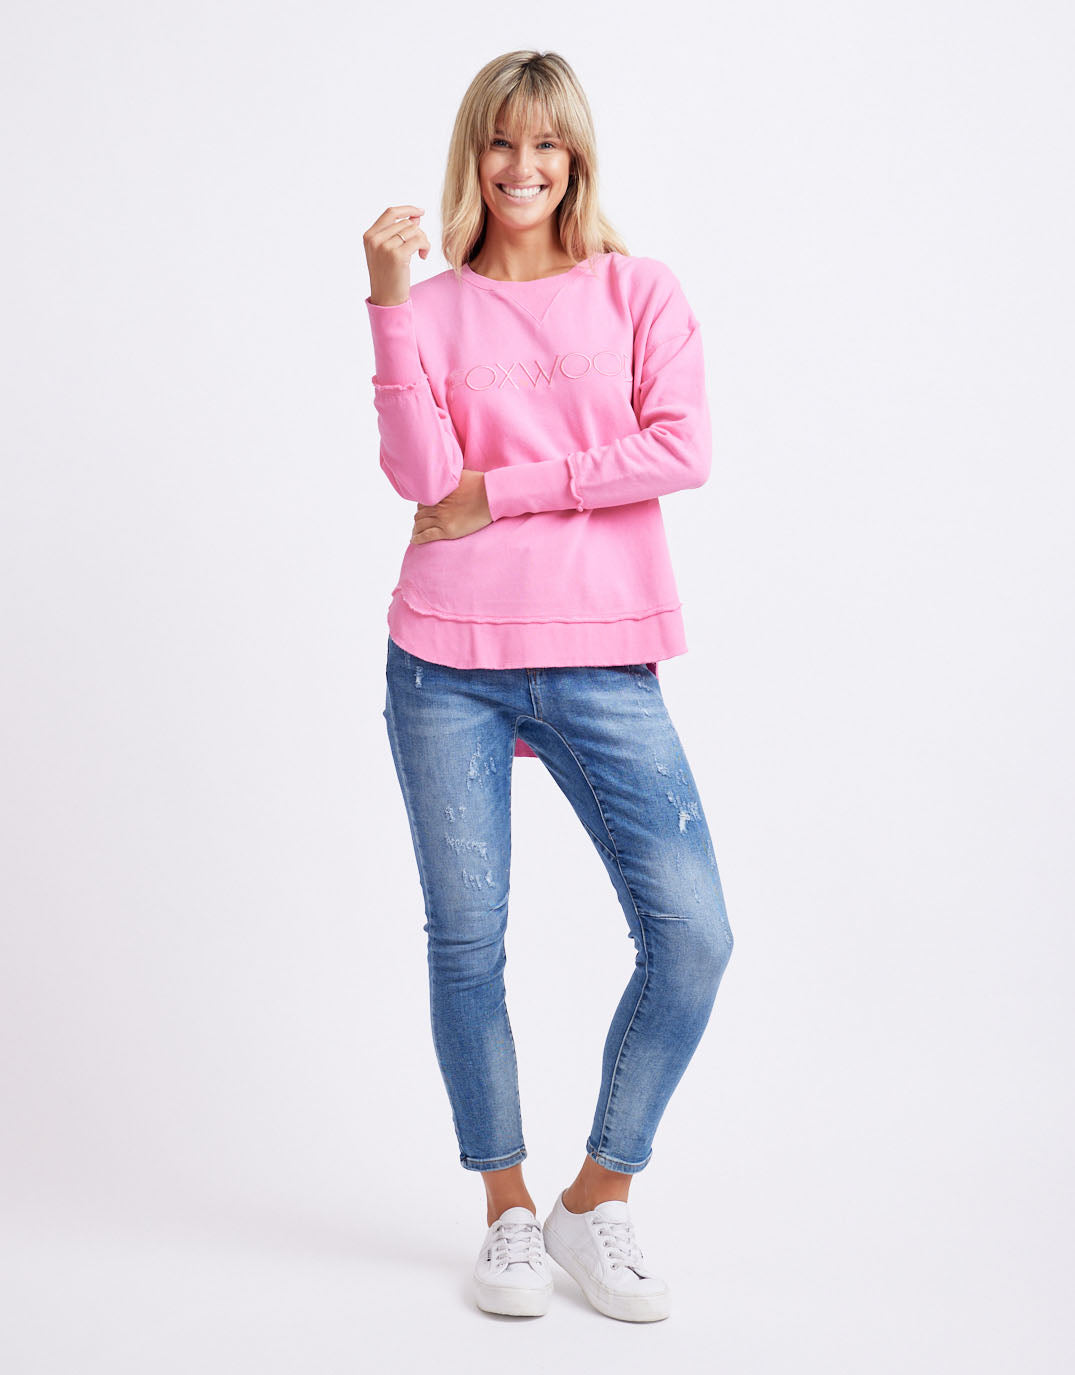 foxwood-simplified-crew-bubblegum-pink-womens-clothing